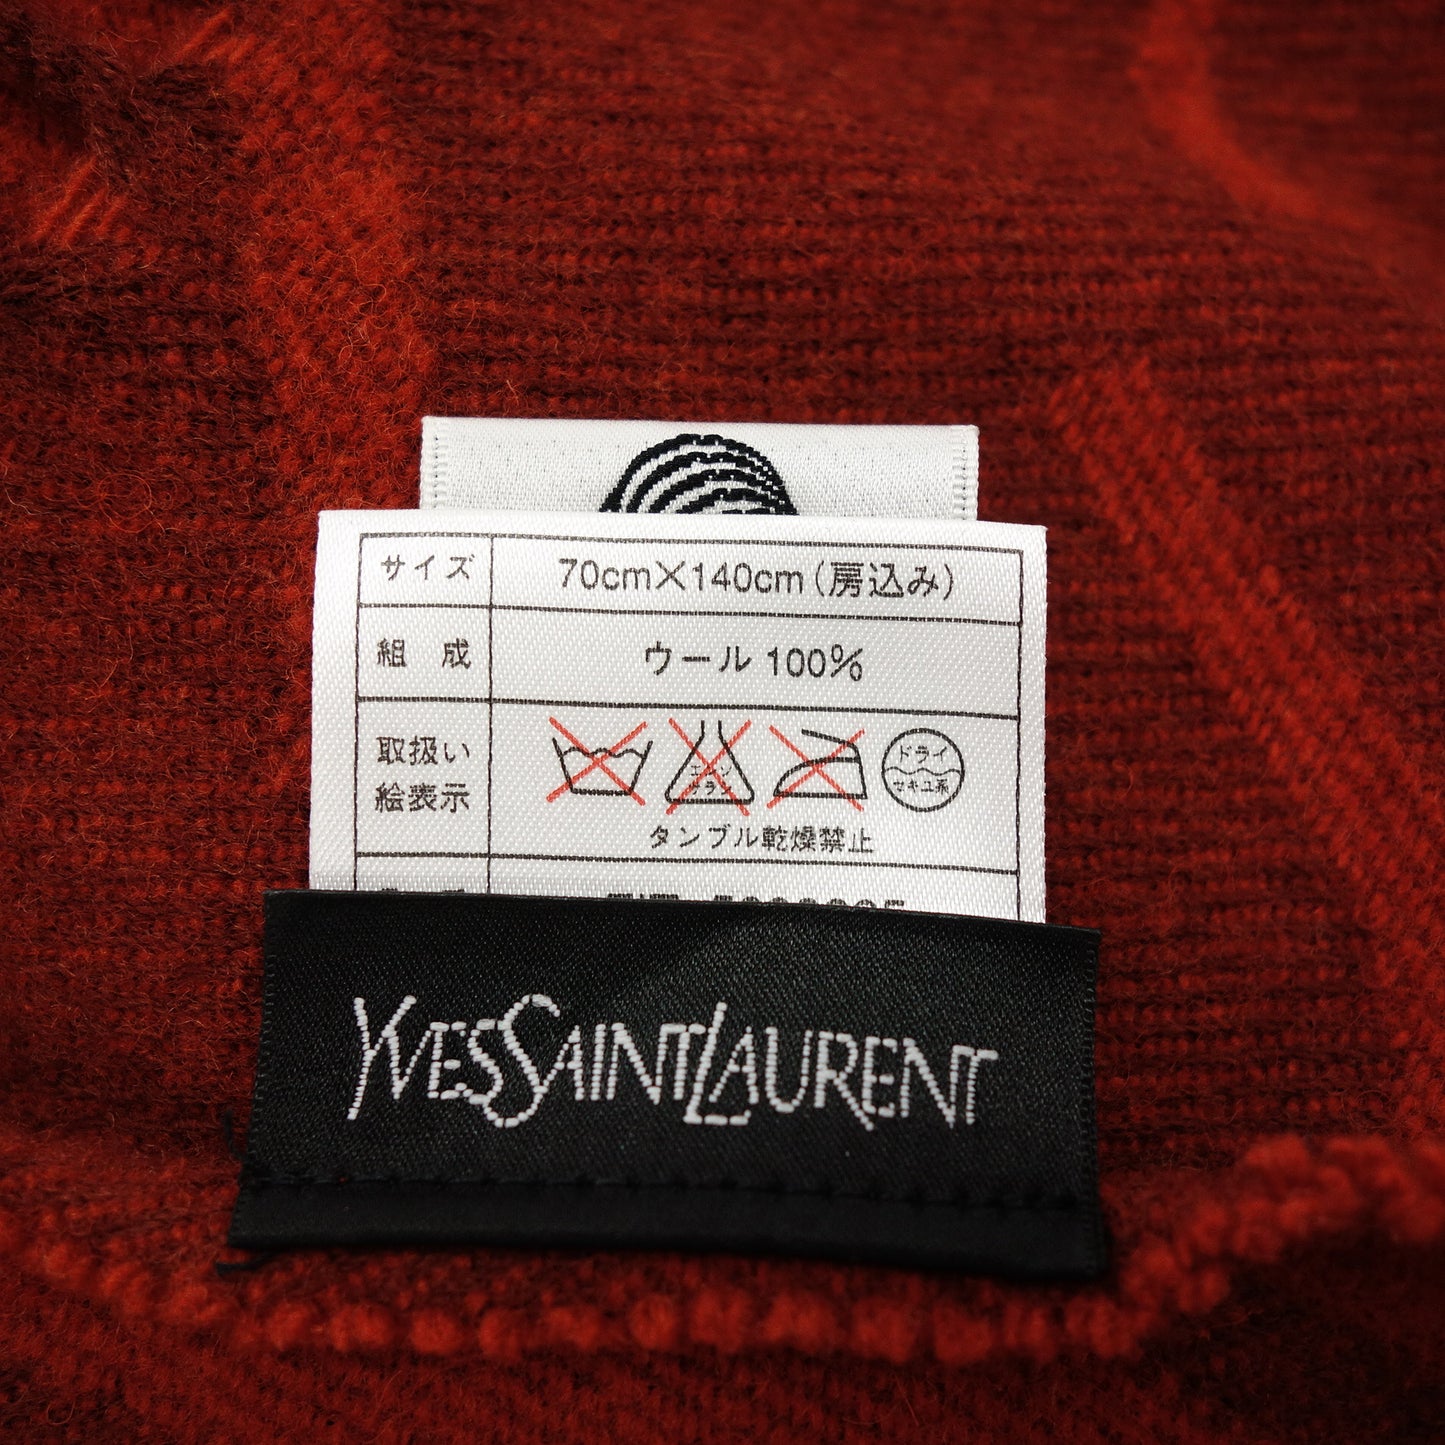 Good condition ◆ Yves Saint Laurent muffler wool red large size YVES SAINT LAURENT [AFI23] 